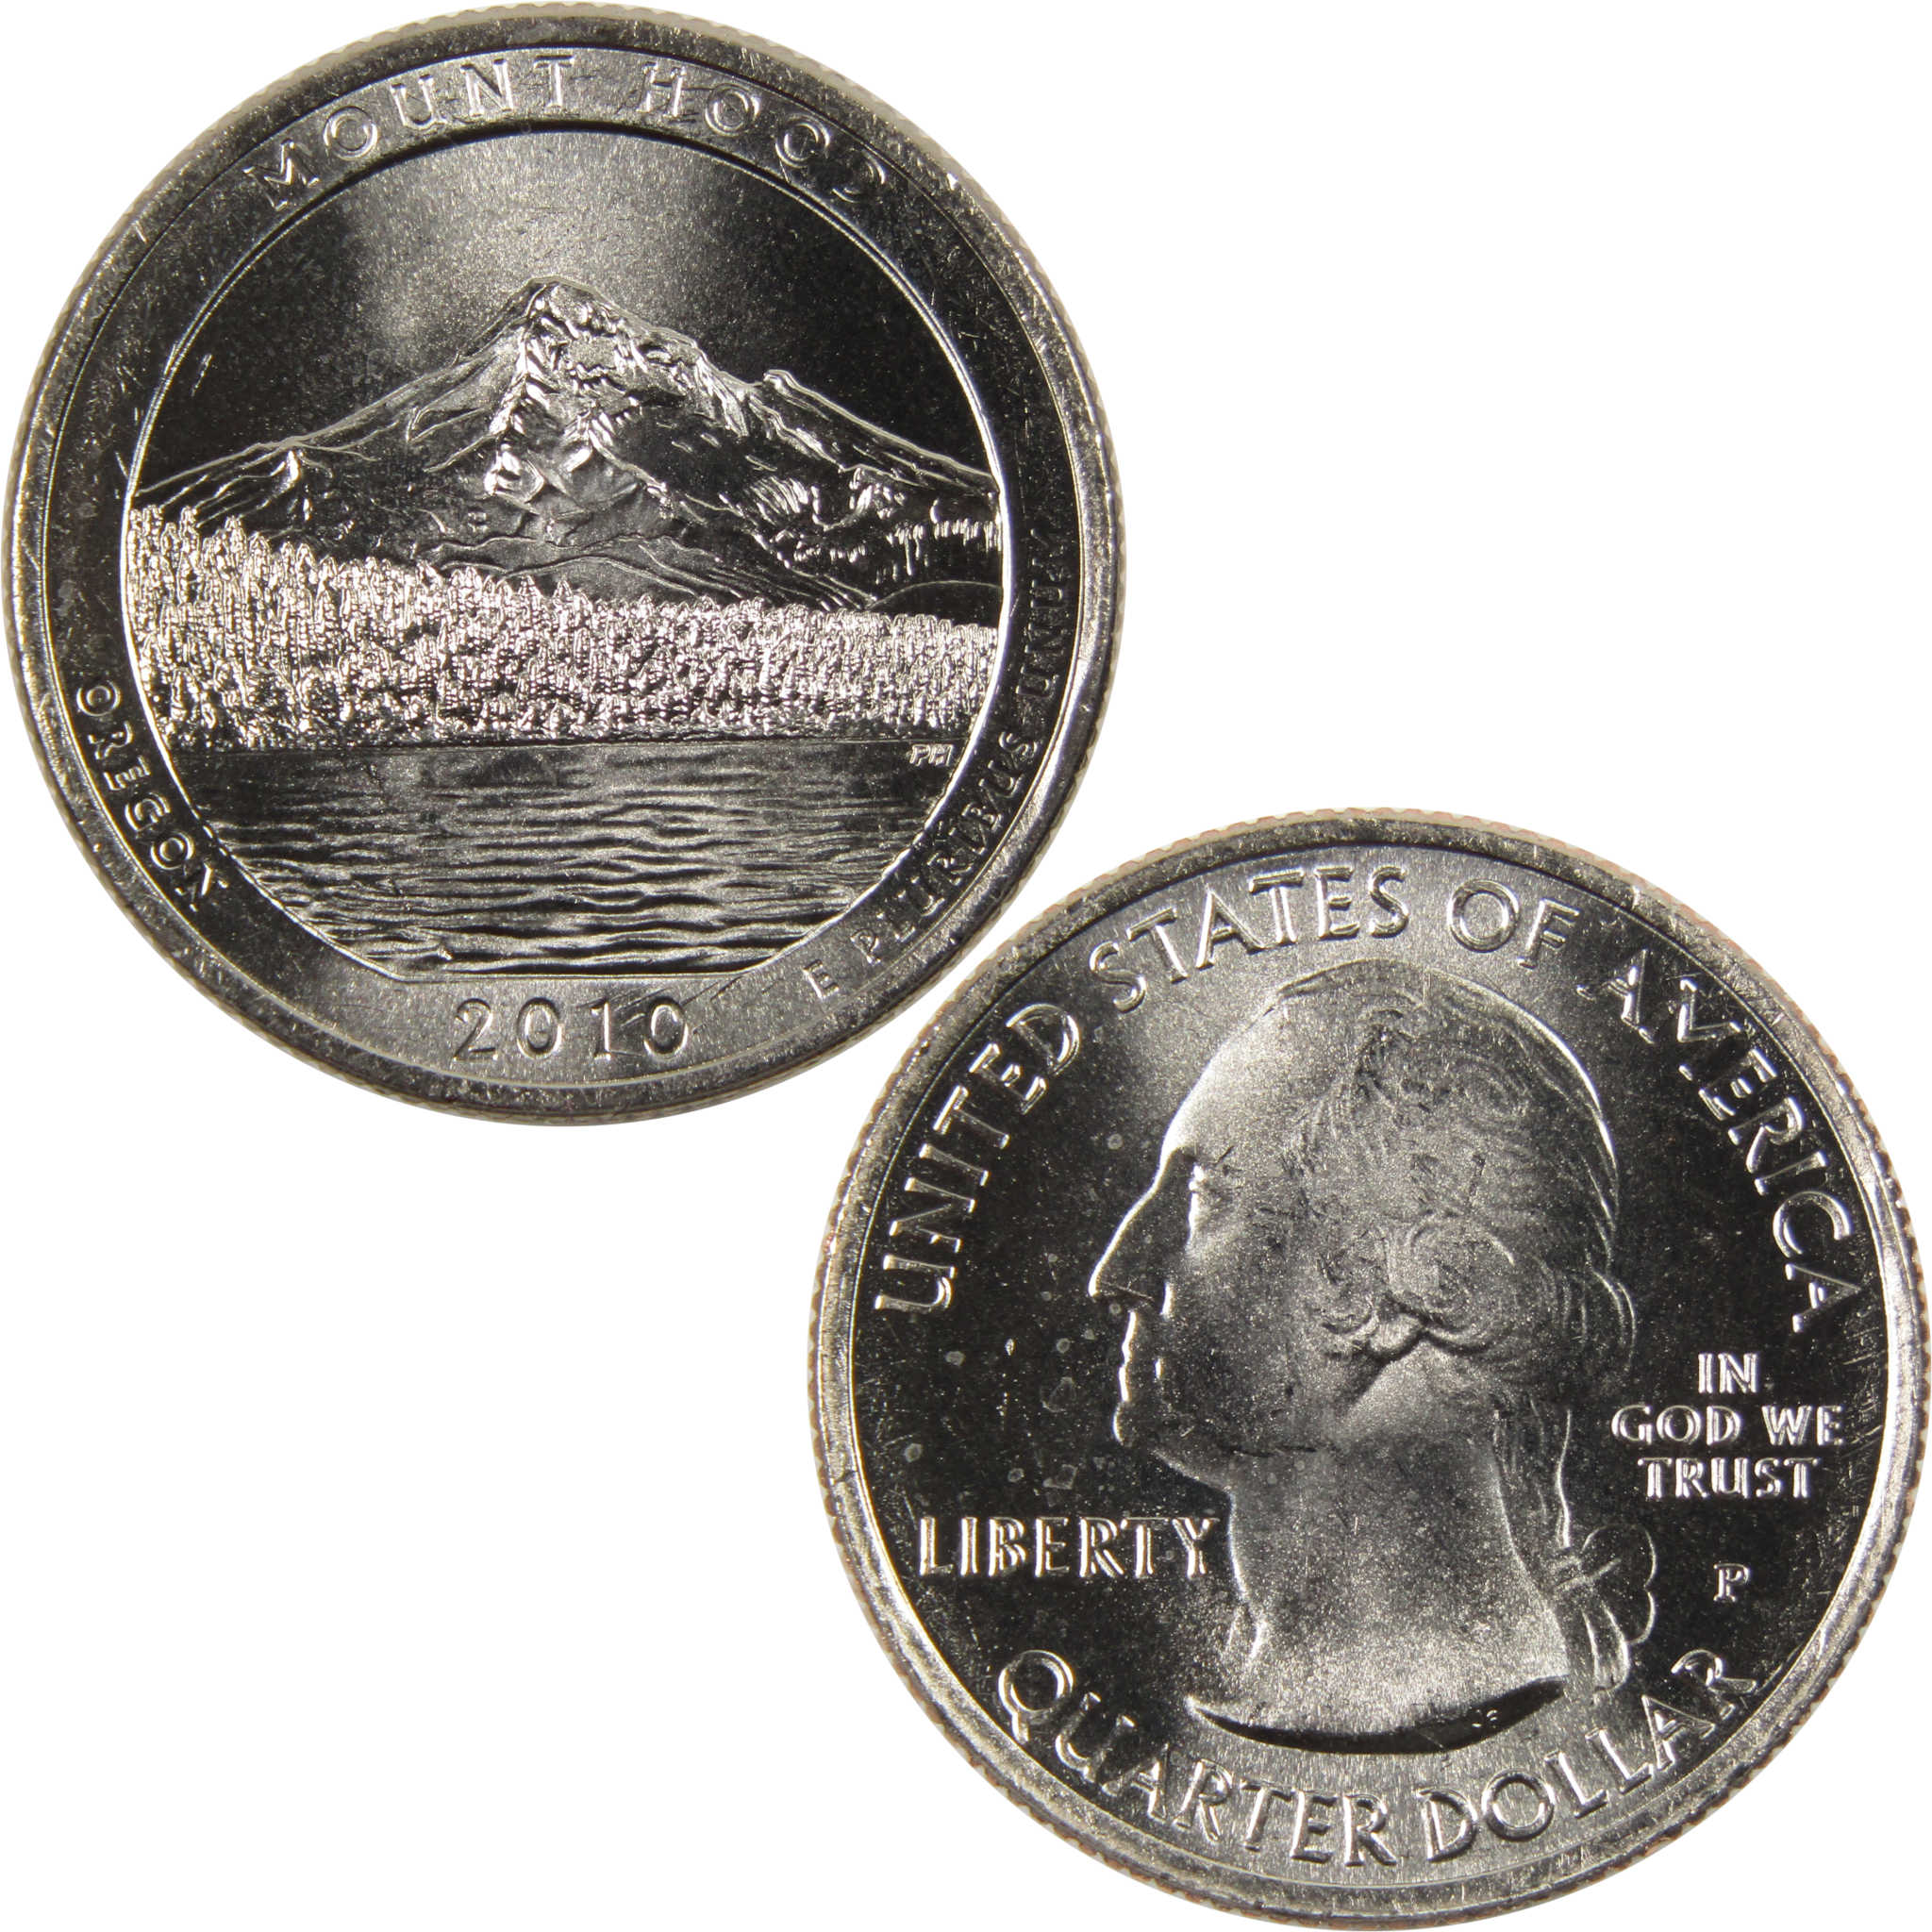 2010 P Mount Hood National Park Quarter BU Uncirculated Clad 25c Coin